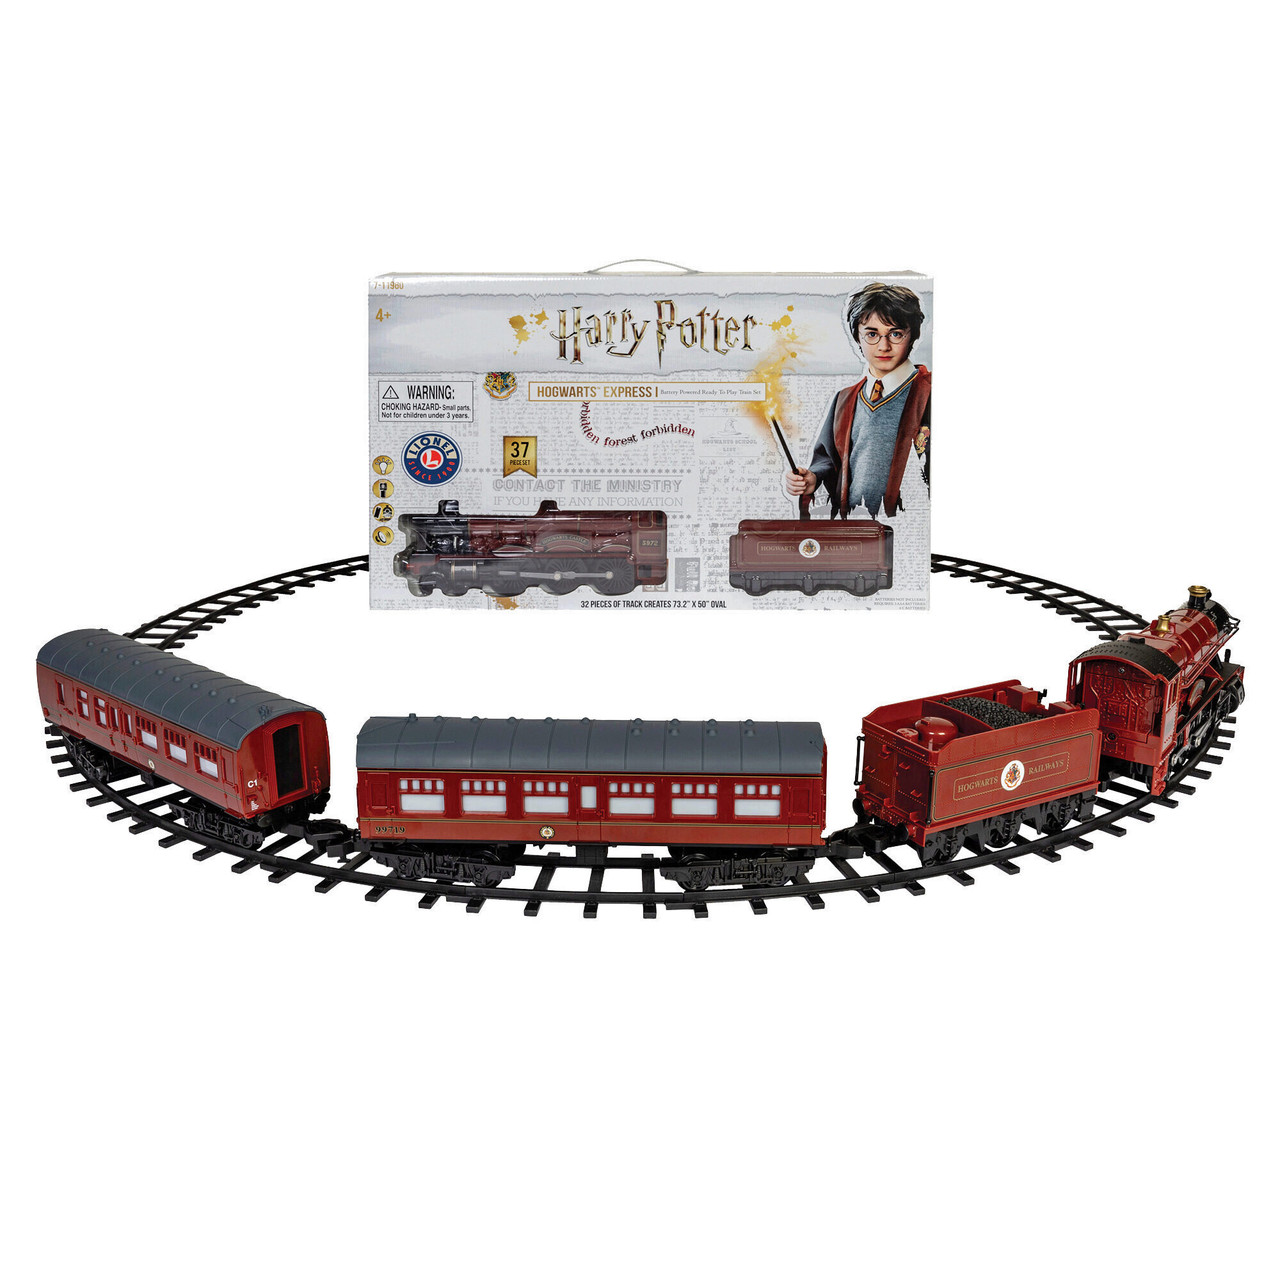 playmobil harry potter tren train custom 1, Goonies never say die